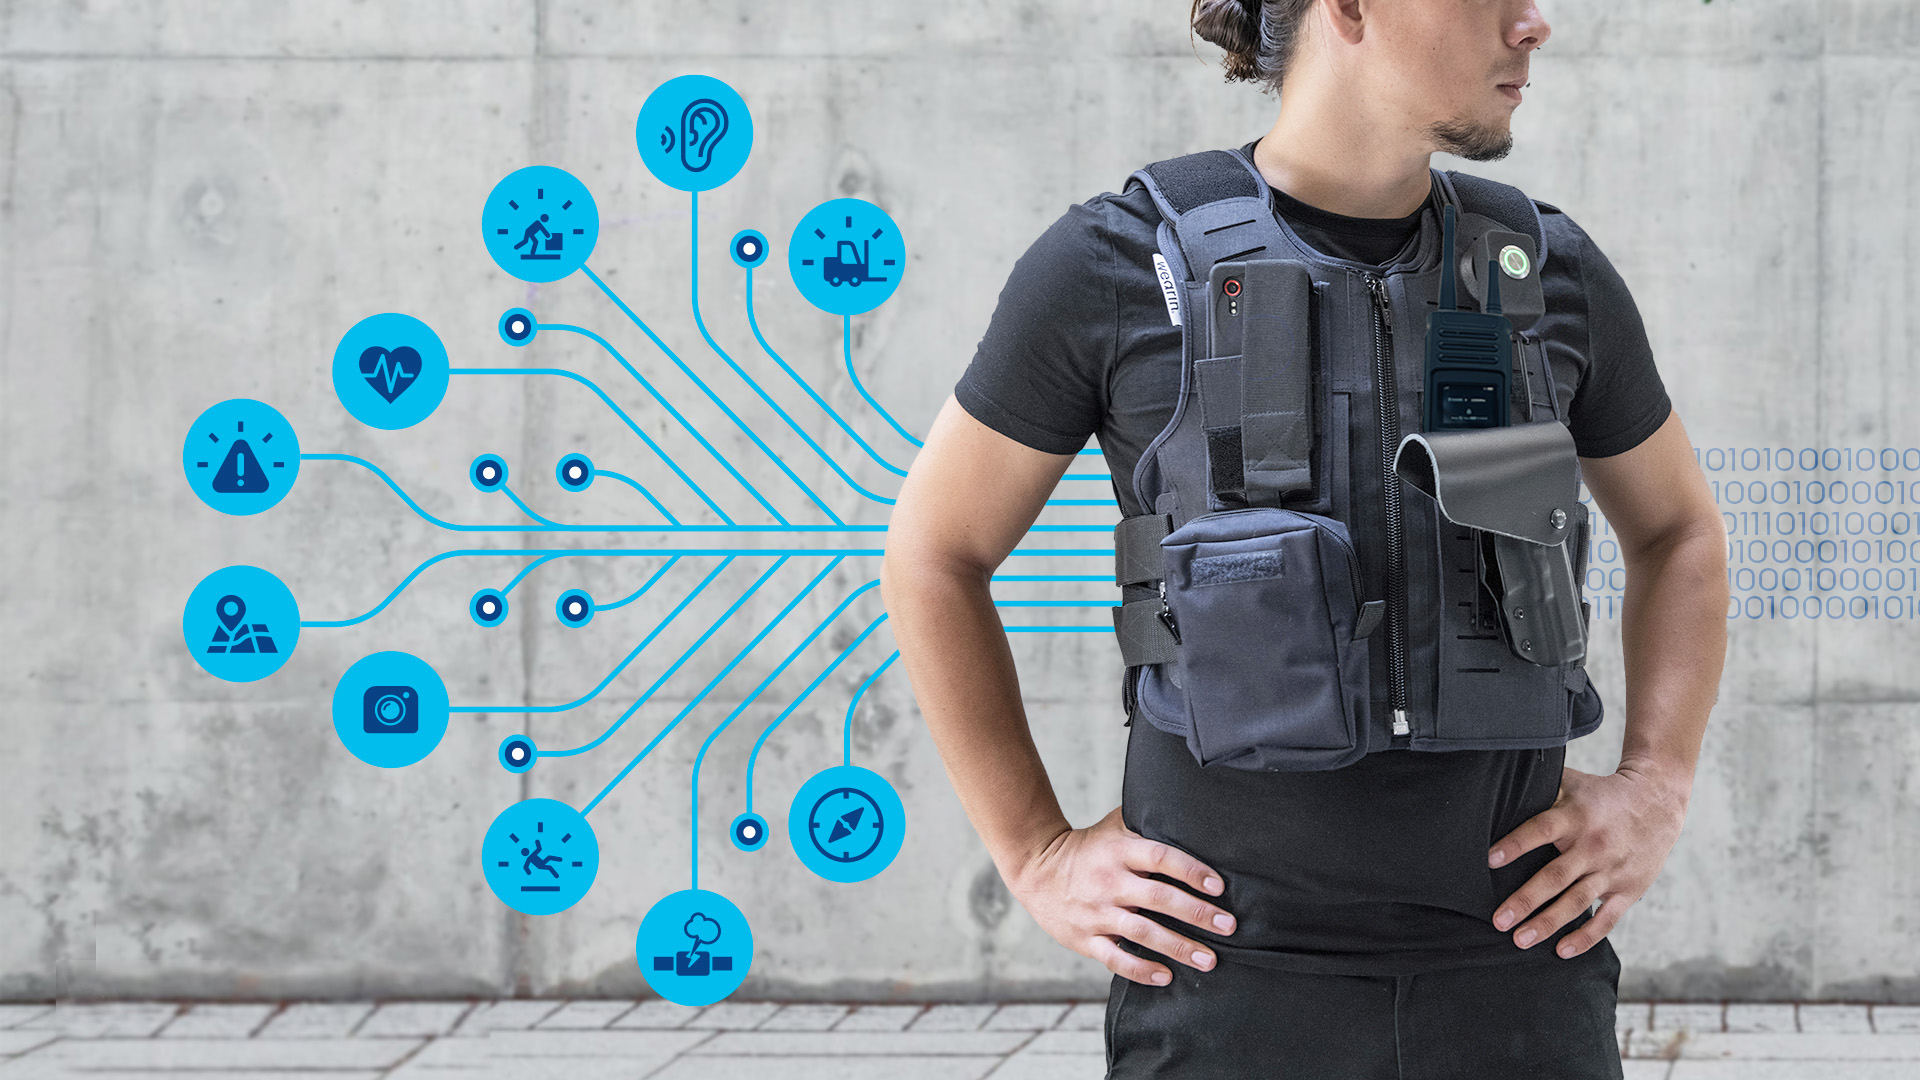 Wearin sensor vest with mesh radio